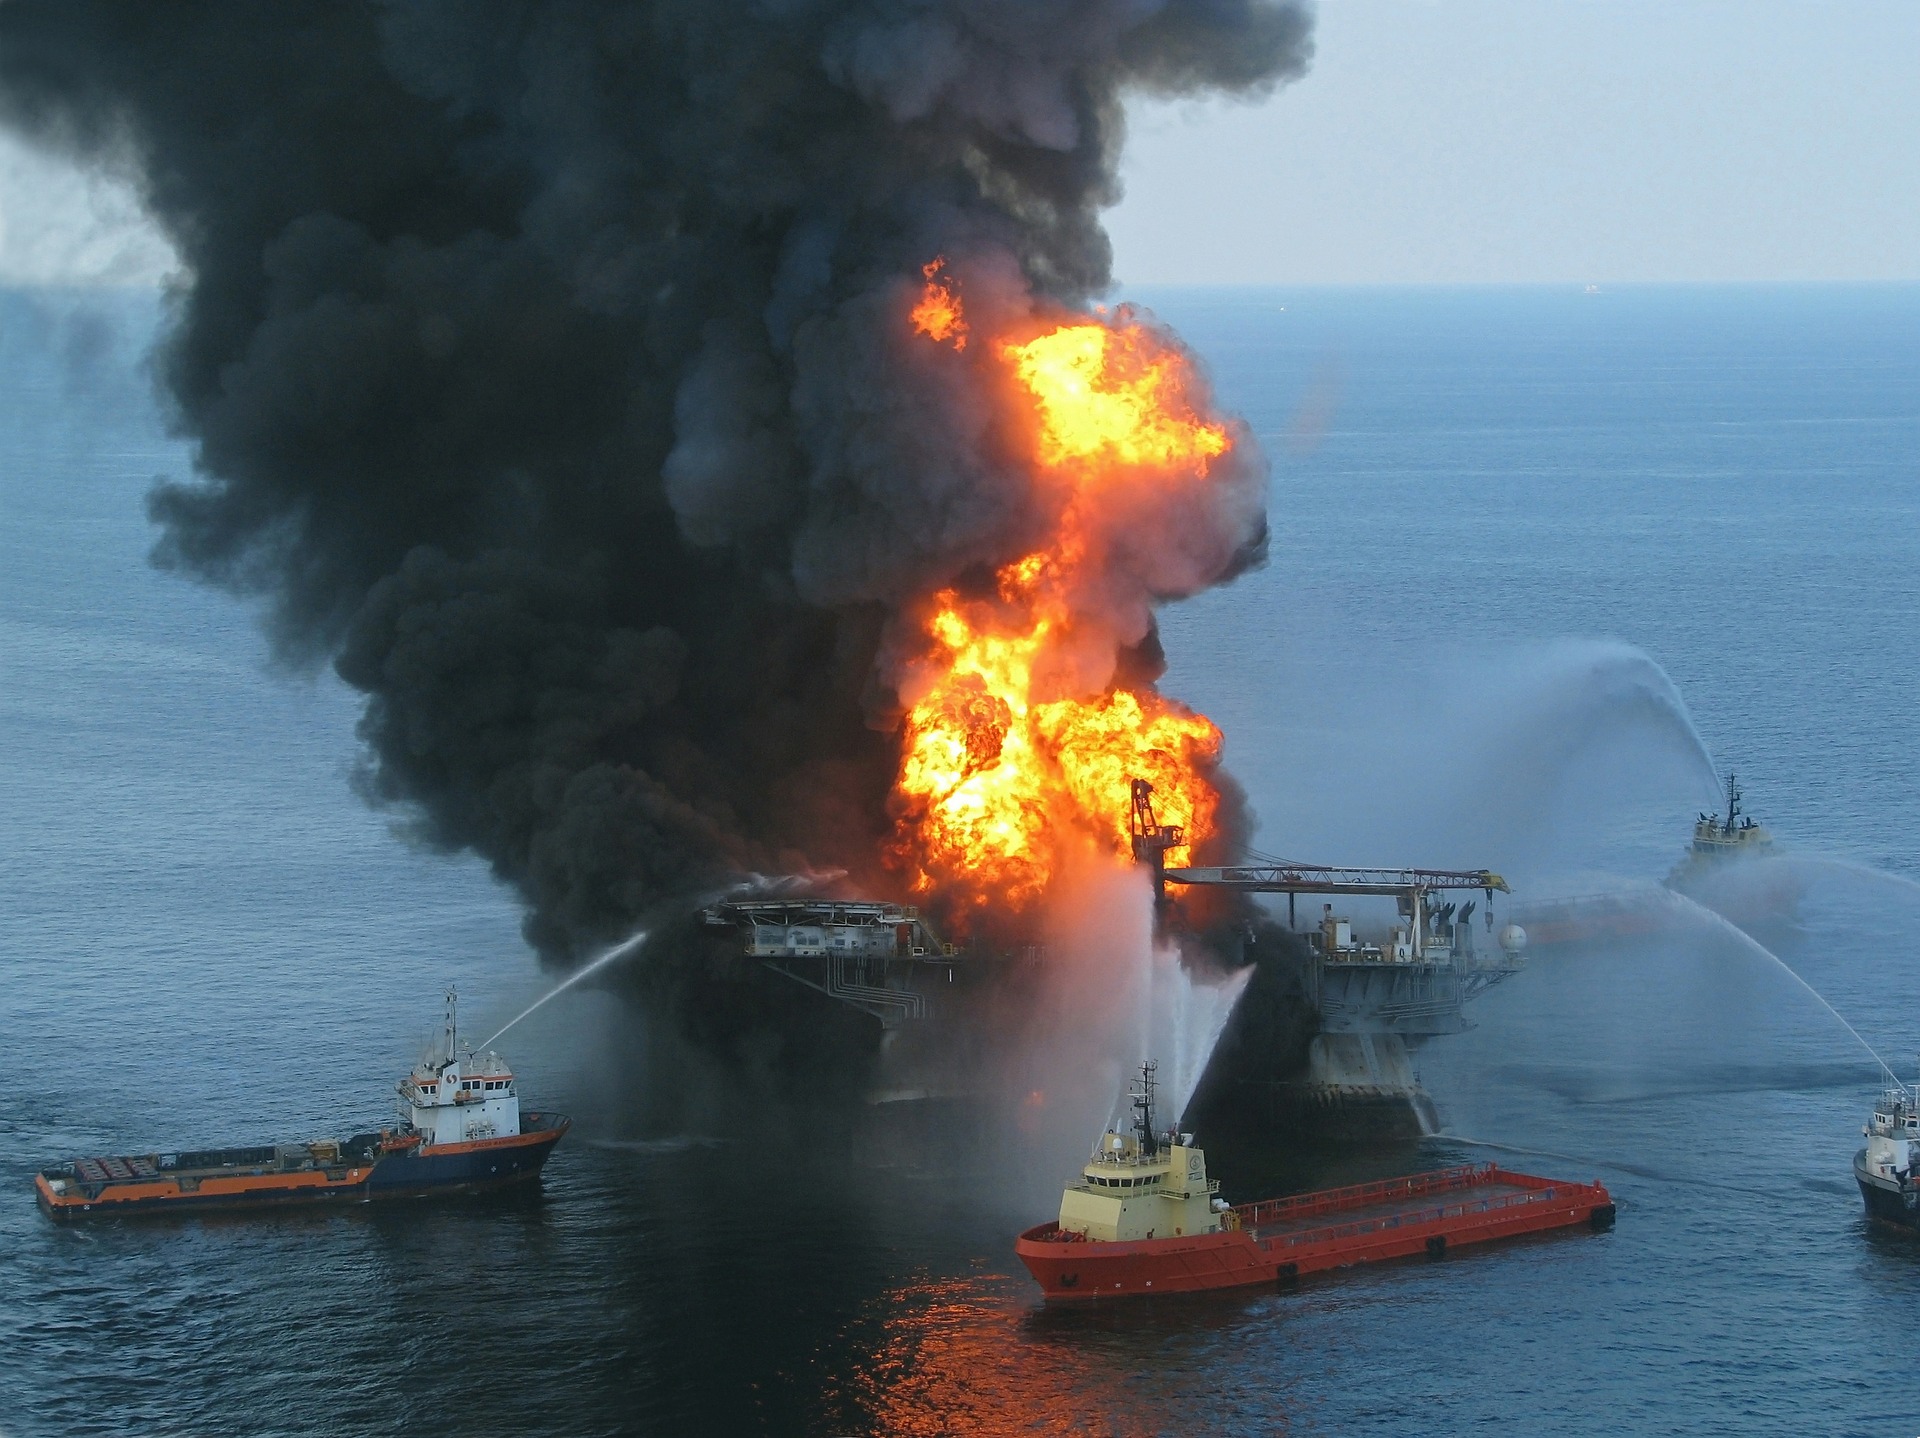 Oil rig explosion in the ocean